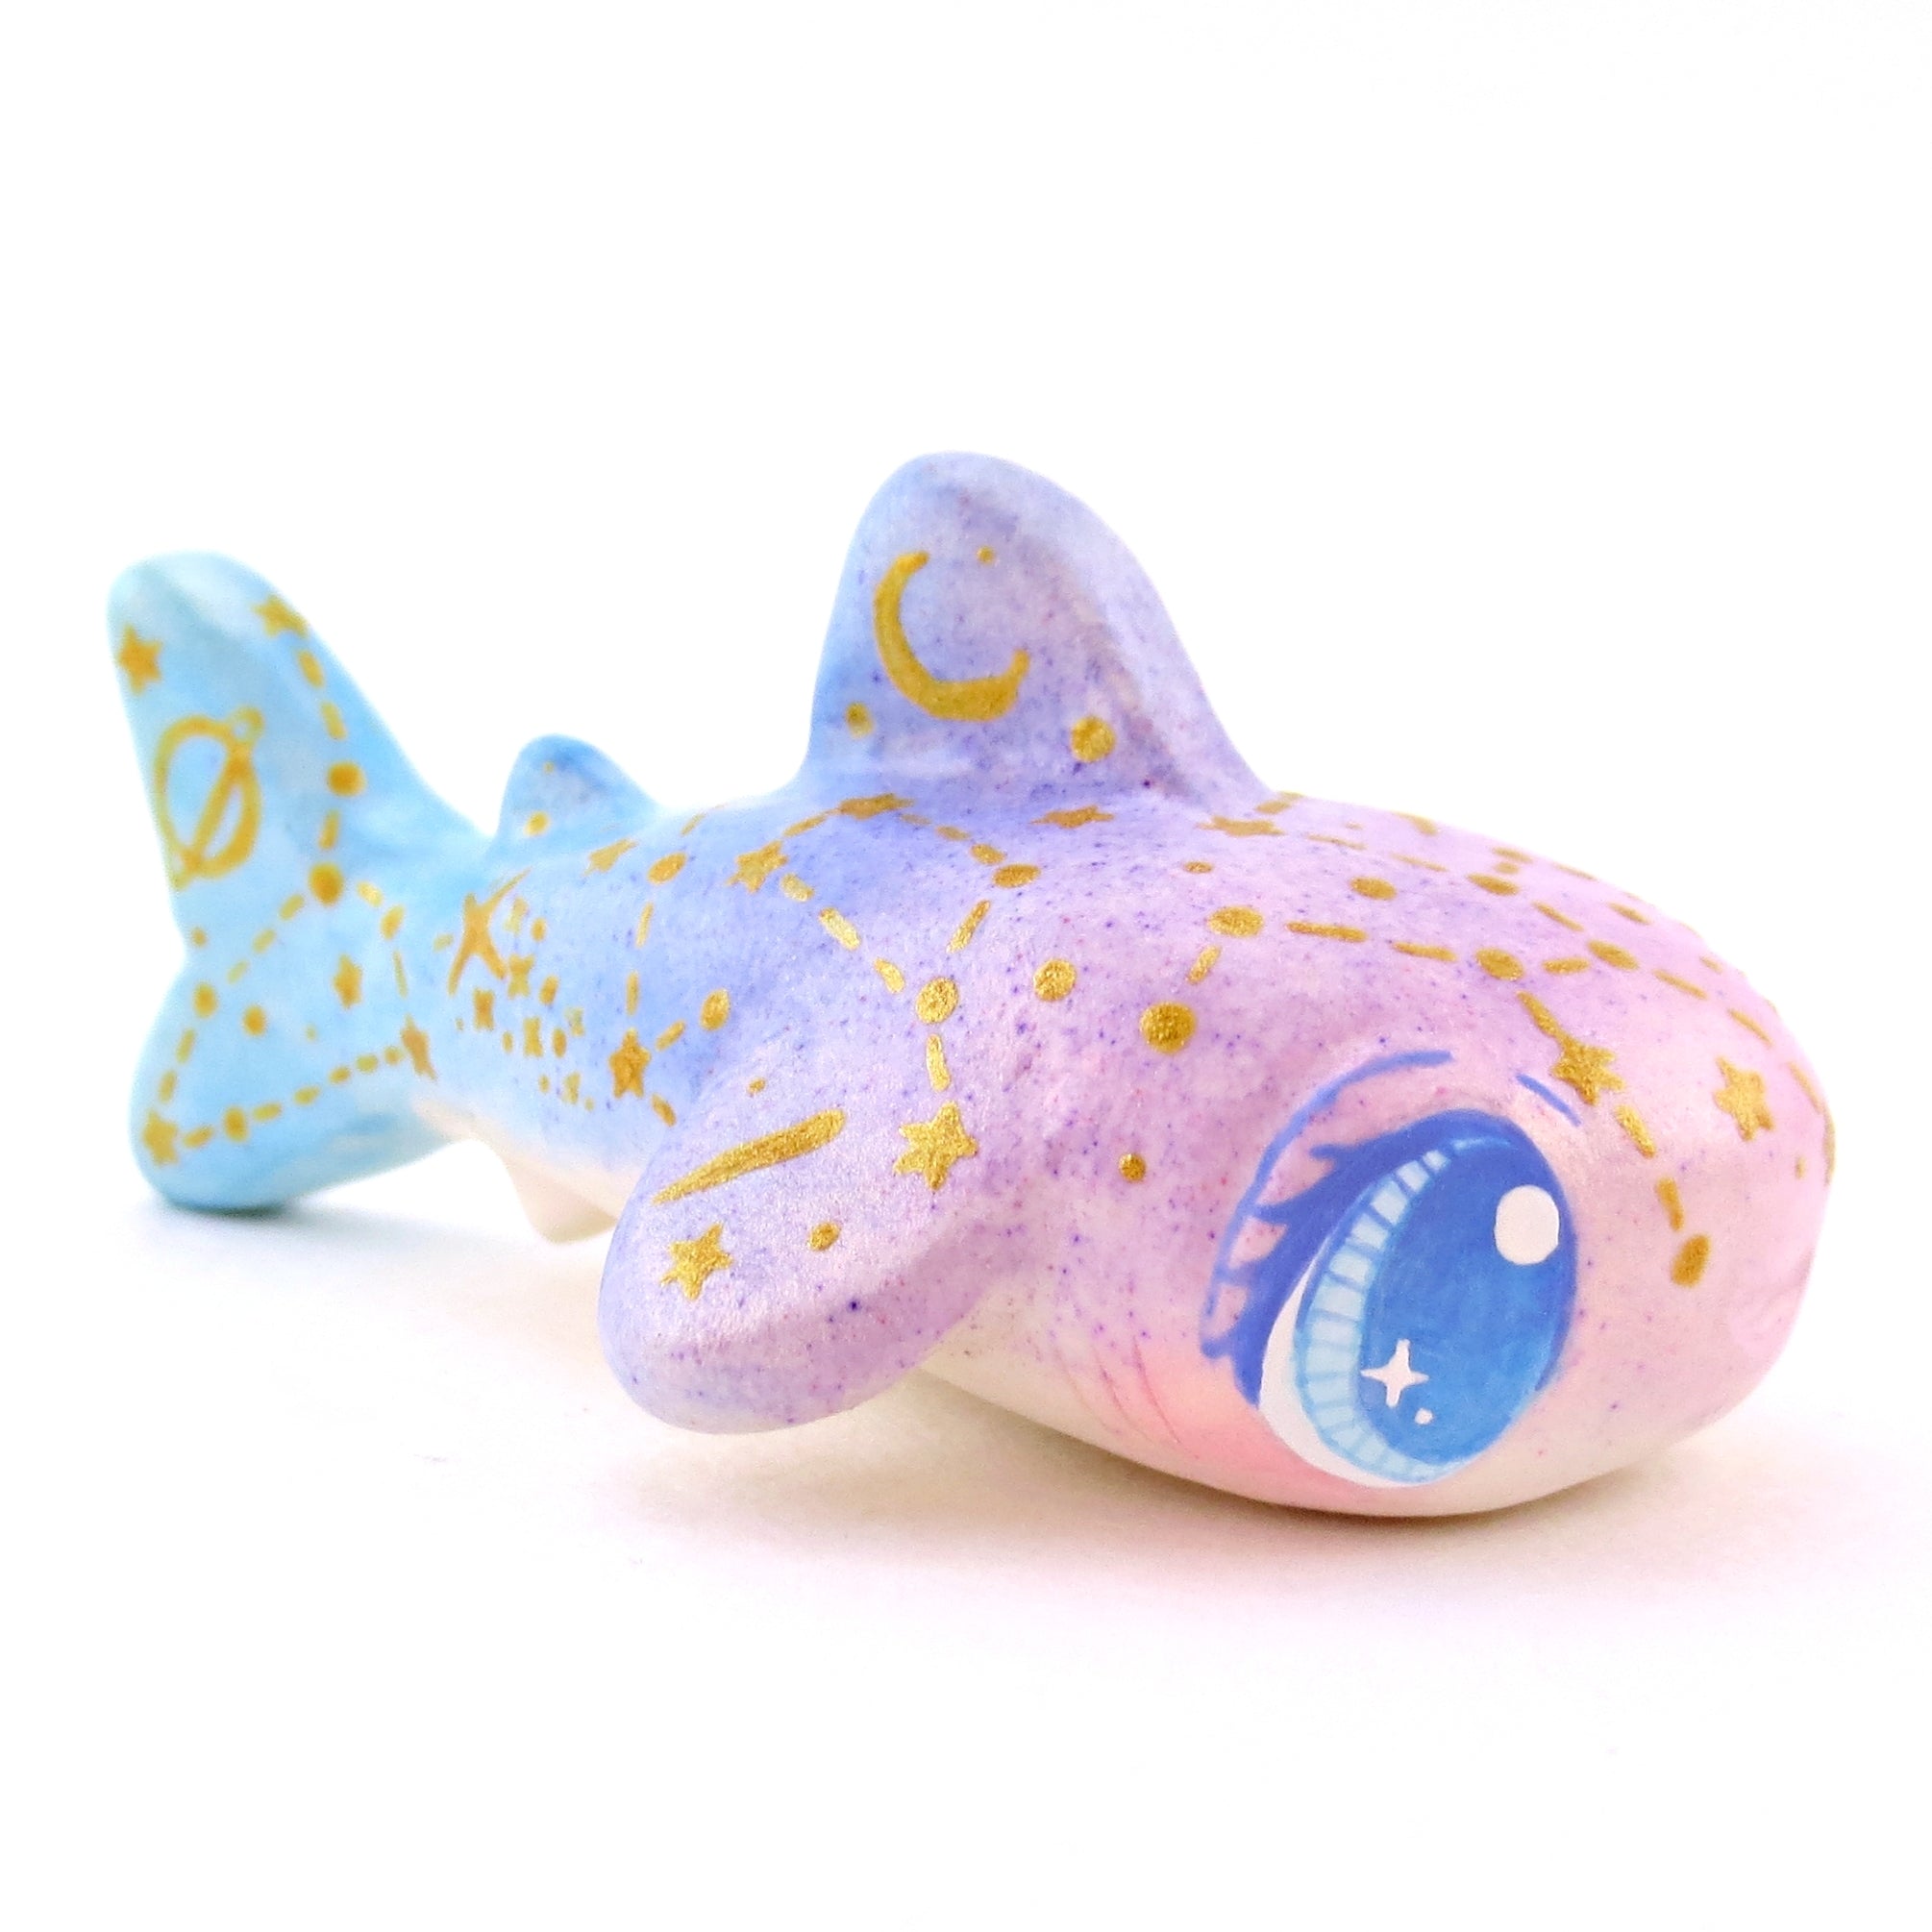 Purple/Blue Ombre Constellation Whale Shark Figurine - Polymer Clay Celestial Sea Animals